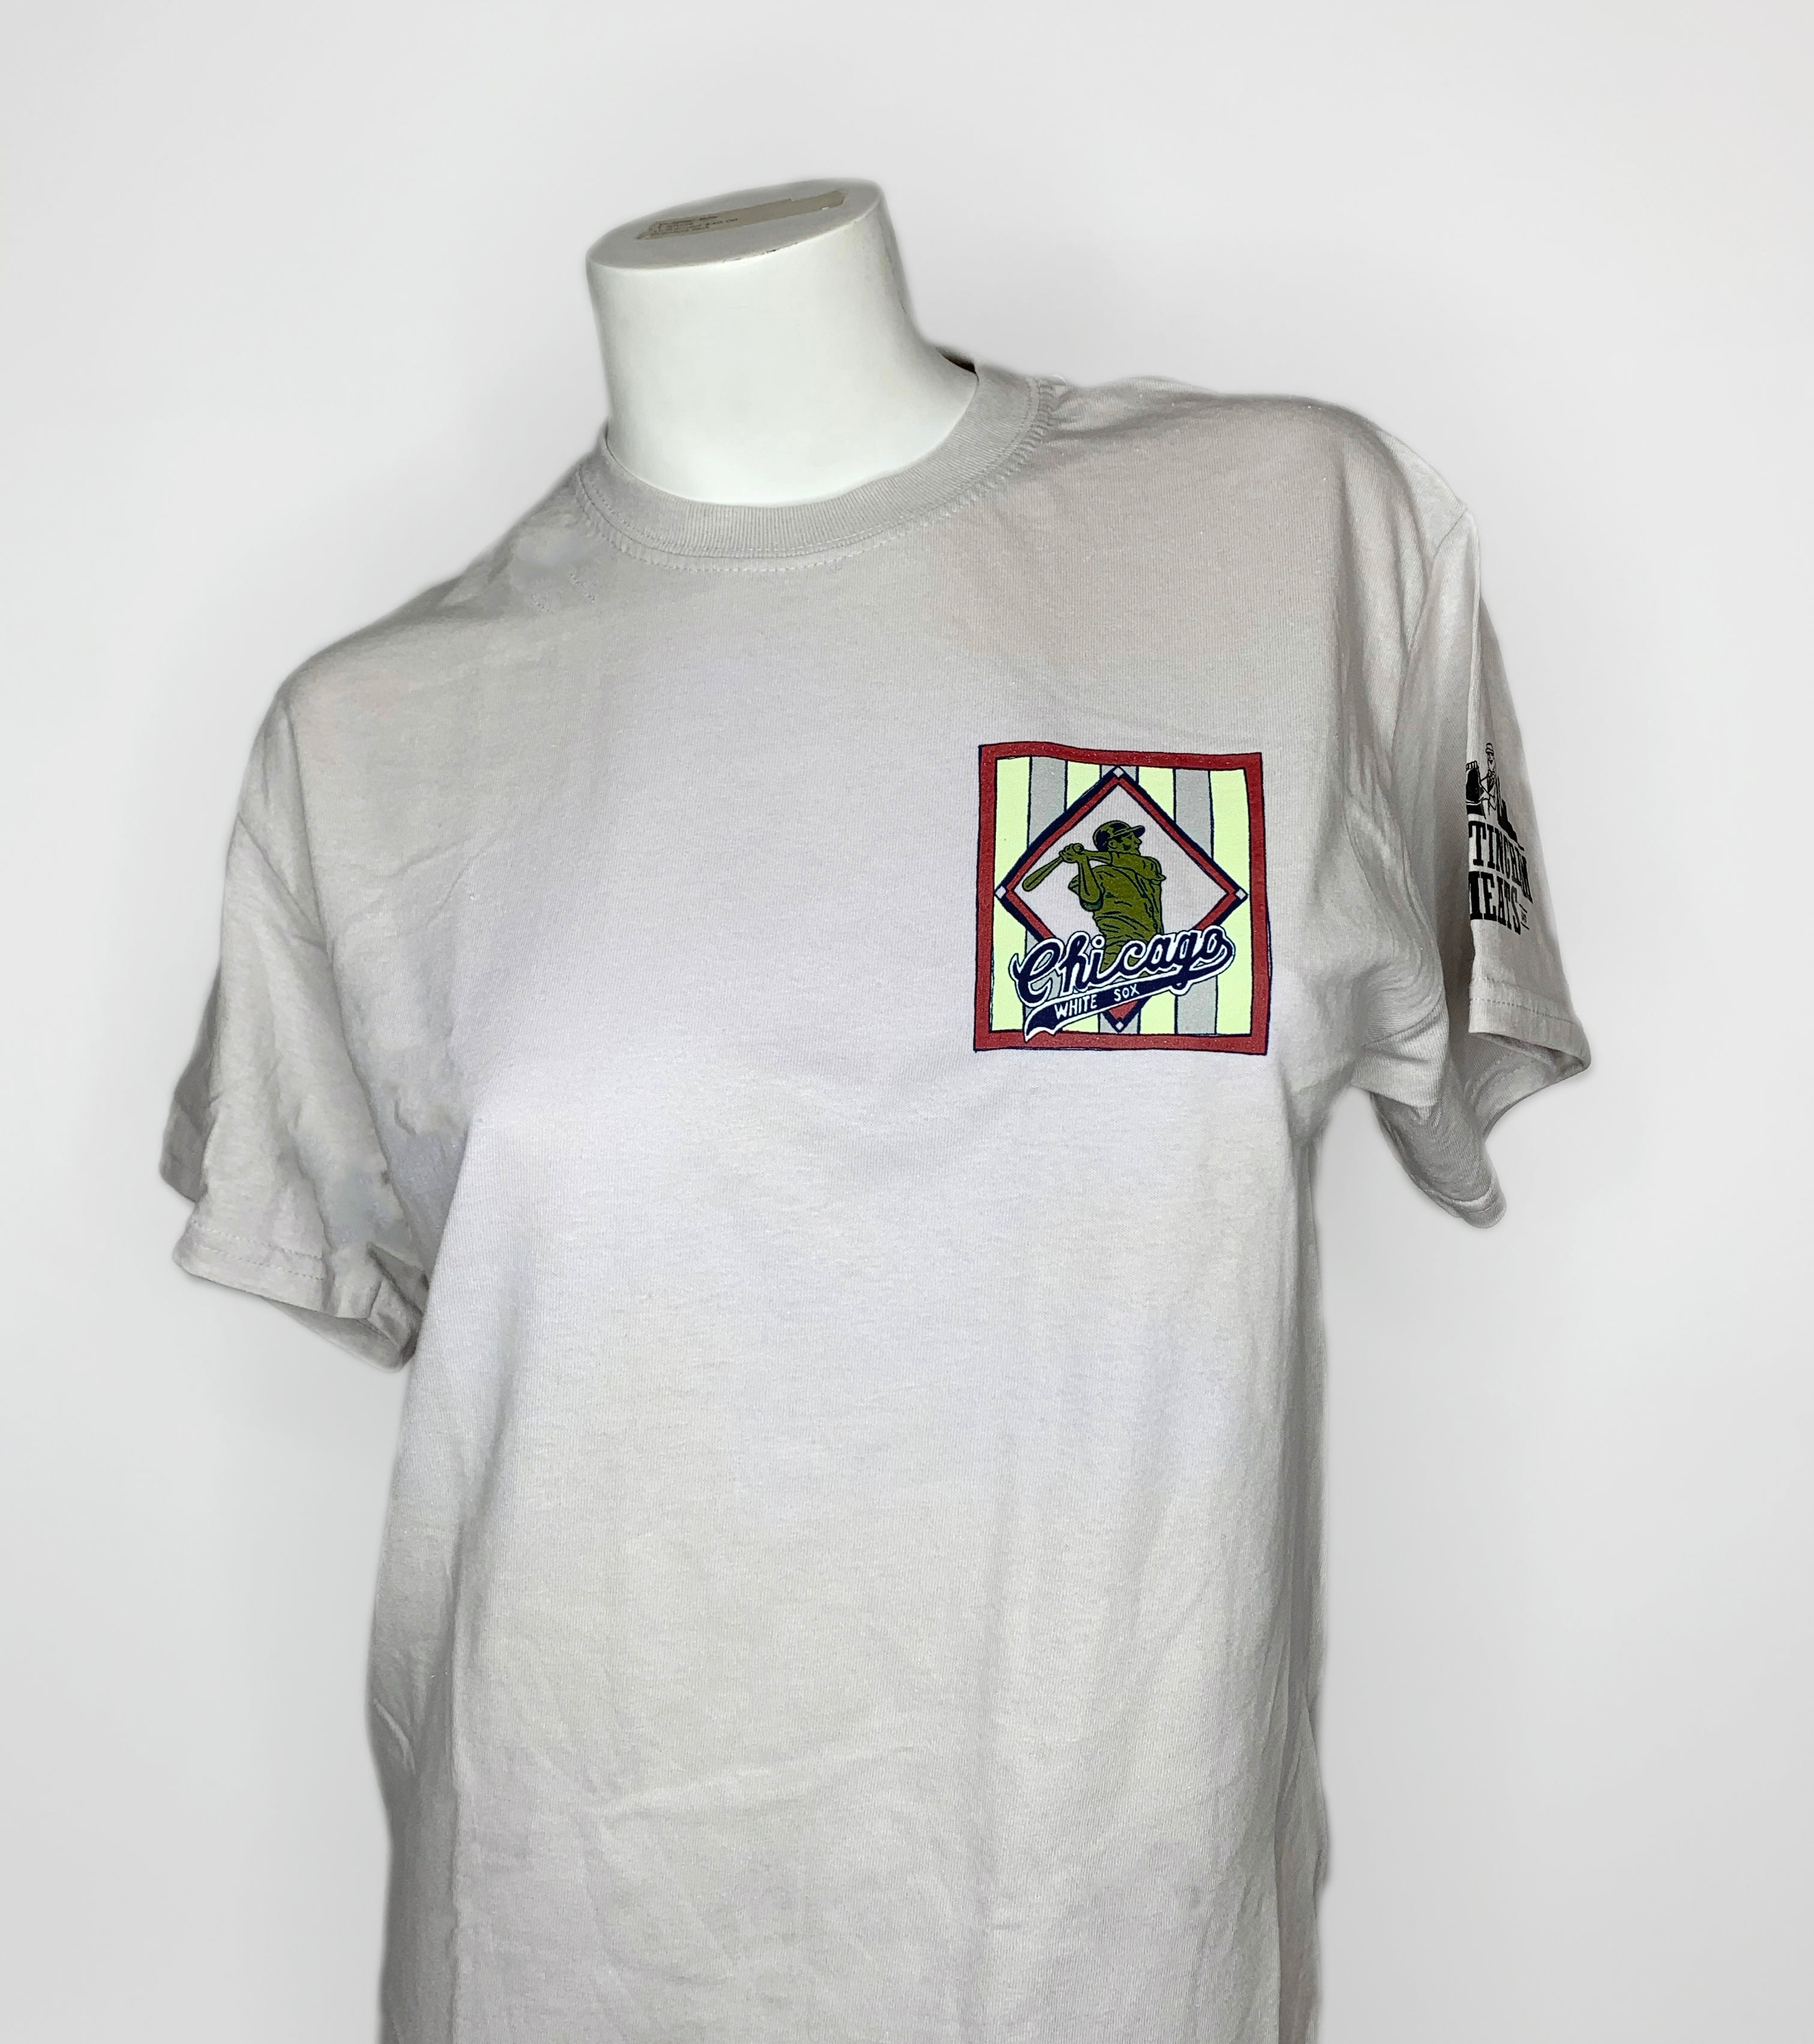 "Retro White Sox" Official White Sox T-Shirt by Zissou Tasseff-Elenkoff